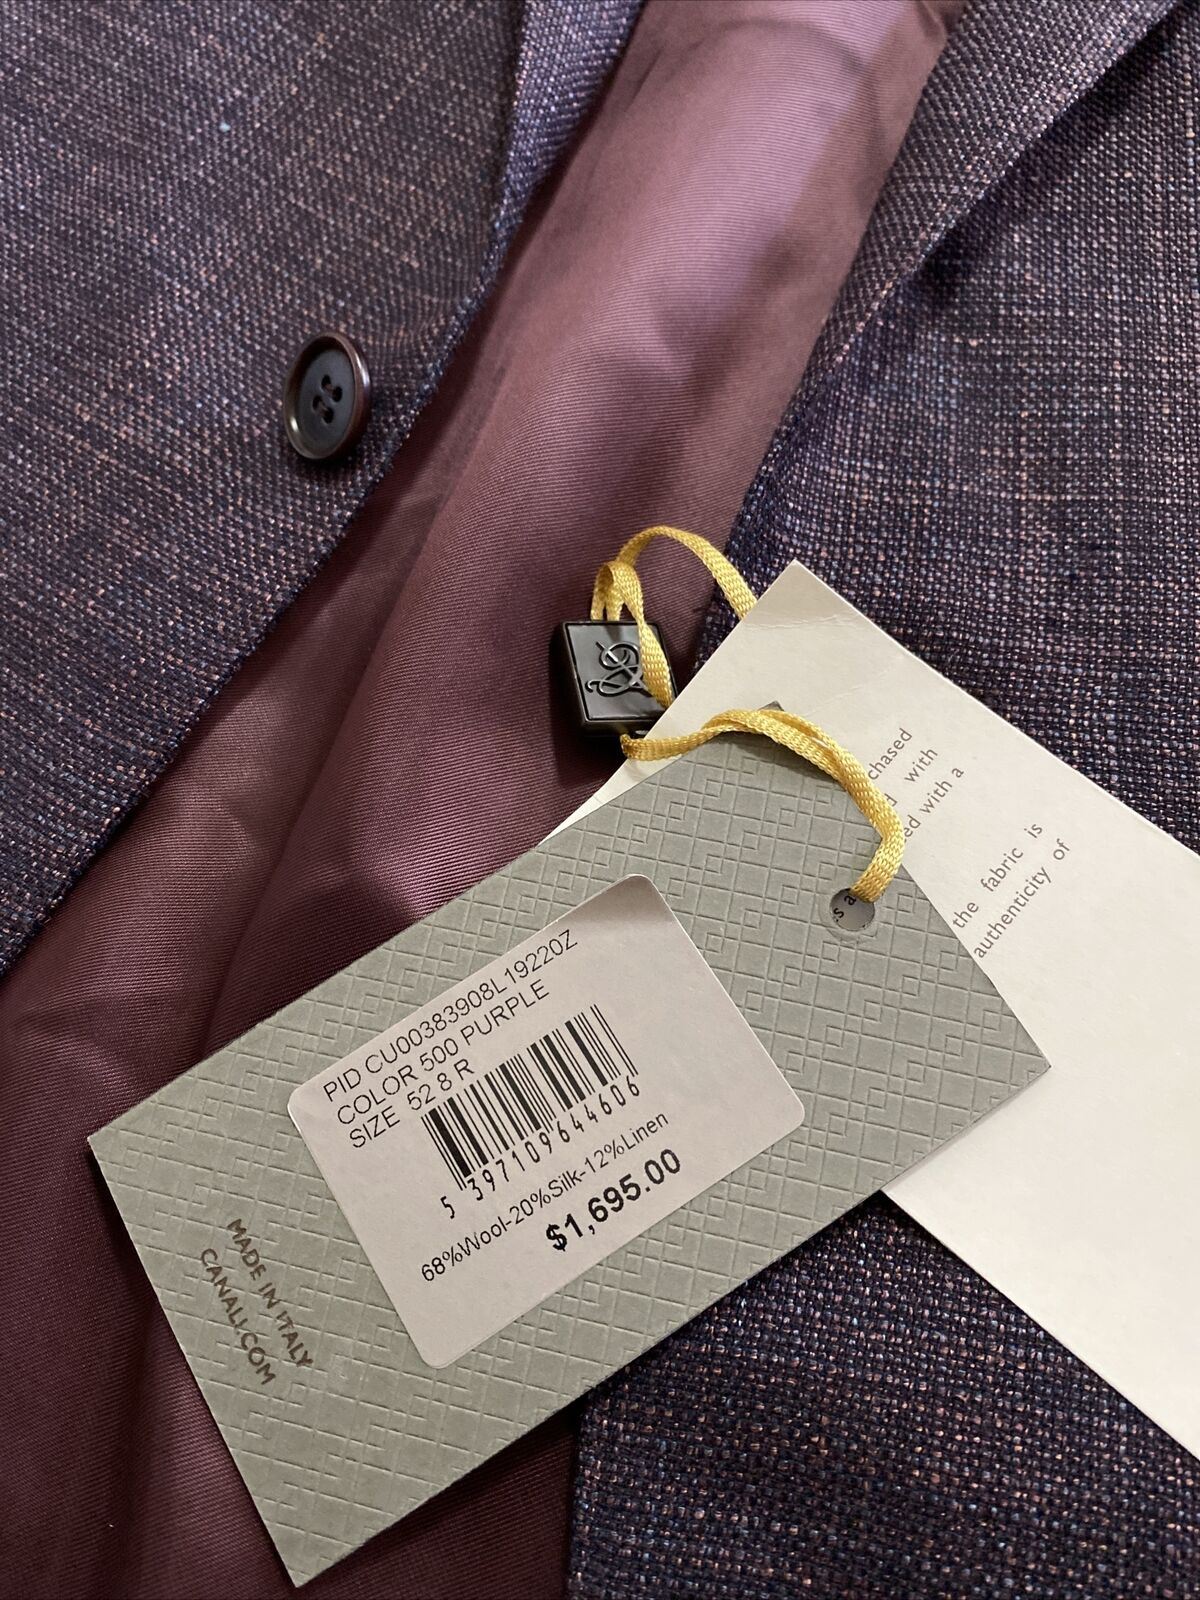 NWT $1695 Canali Men’s Jacket Blazer Purple Multi 42R US ( 52R Eu ) Italy